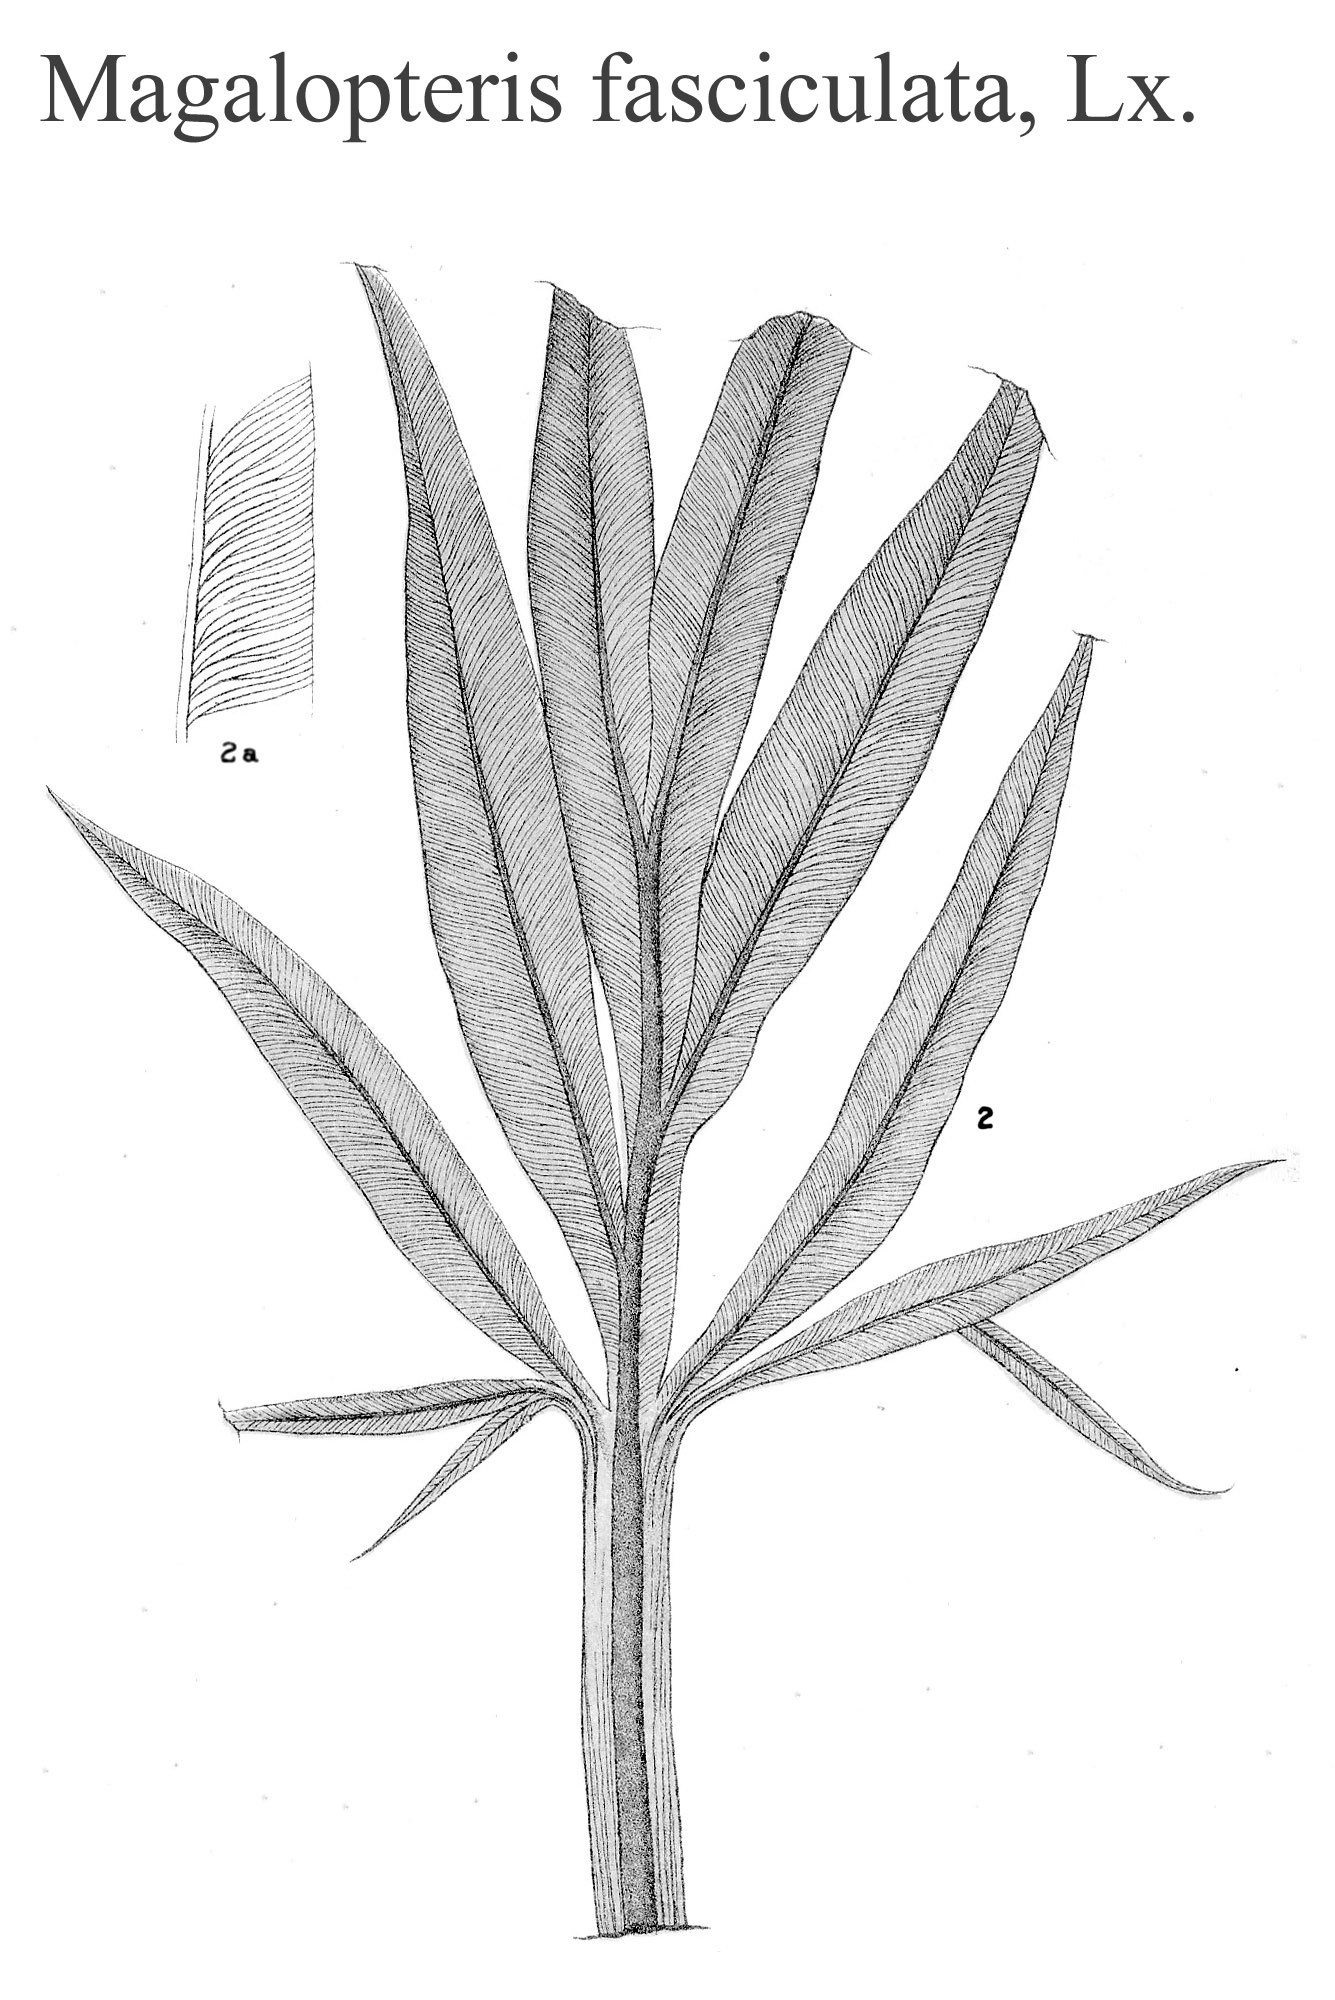 Magalopteris fasciculata, Plate XXIV